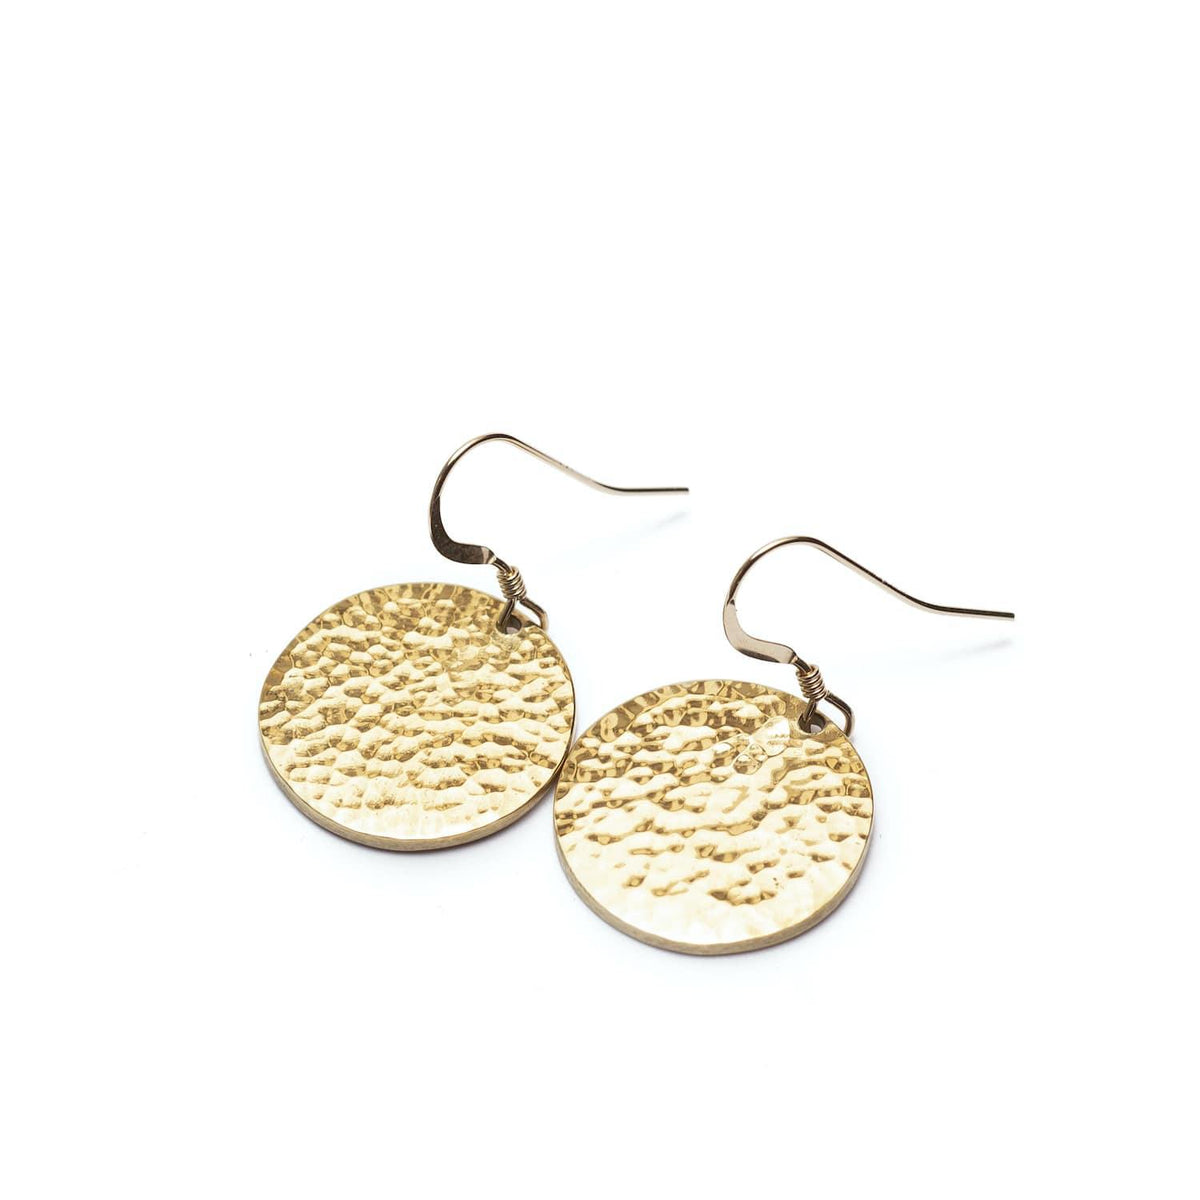 Minimal gold plated medallion earrings handmade from brass for everyday wear